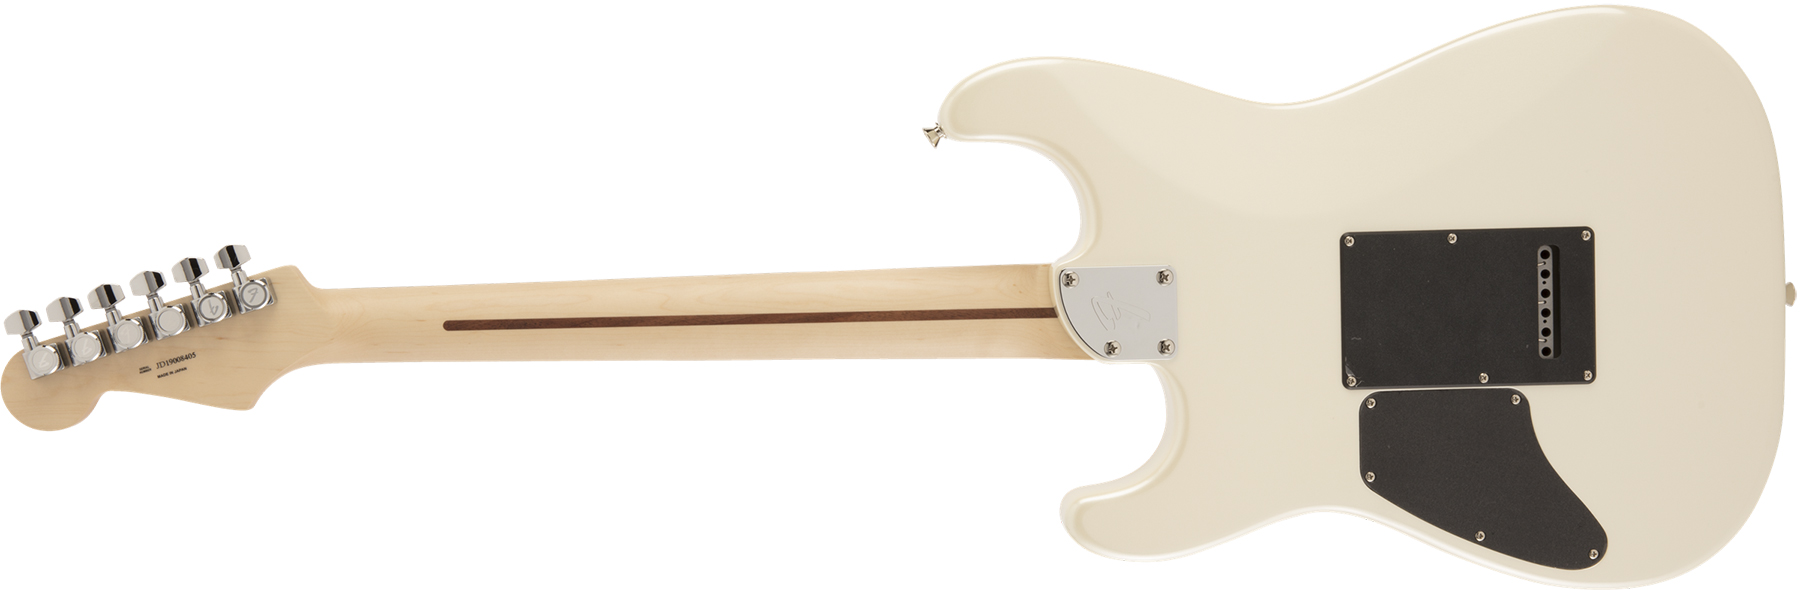 Fender Strat Modern Hh Japon Trem Rw - Olympic Pearl - Elektrische gitaar in Str-vorm - Variation 1